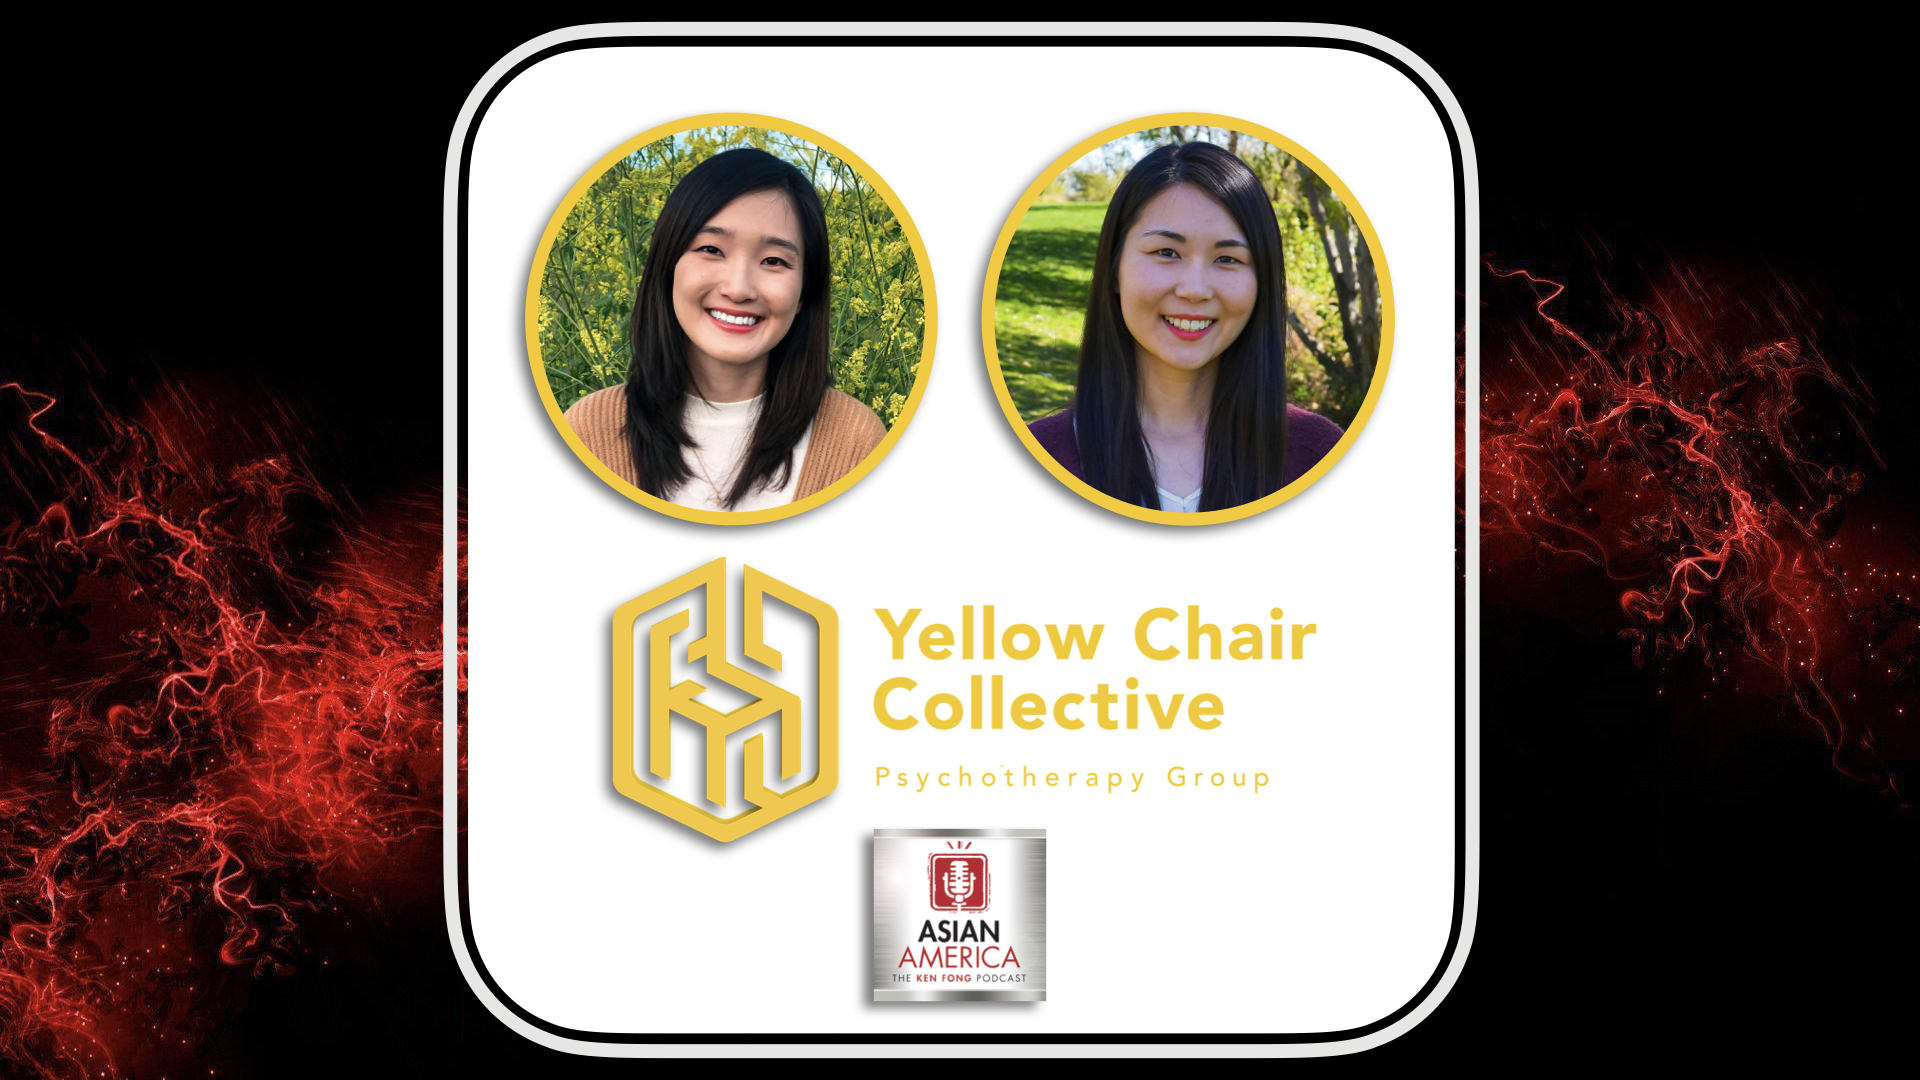 Linda Yoon & Soo Jin Lee @ The Yellow Chair Collective